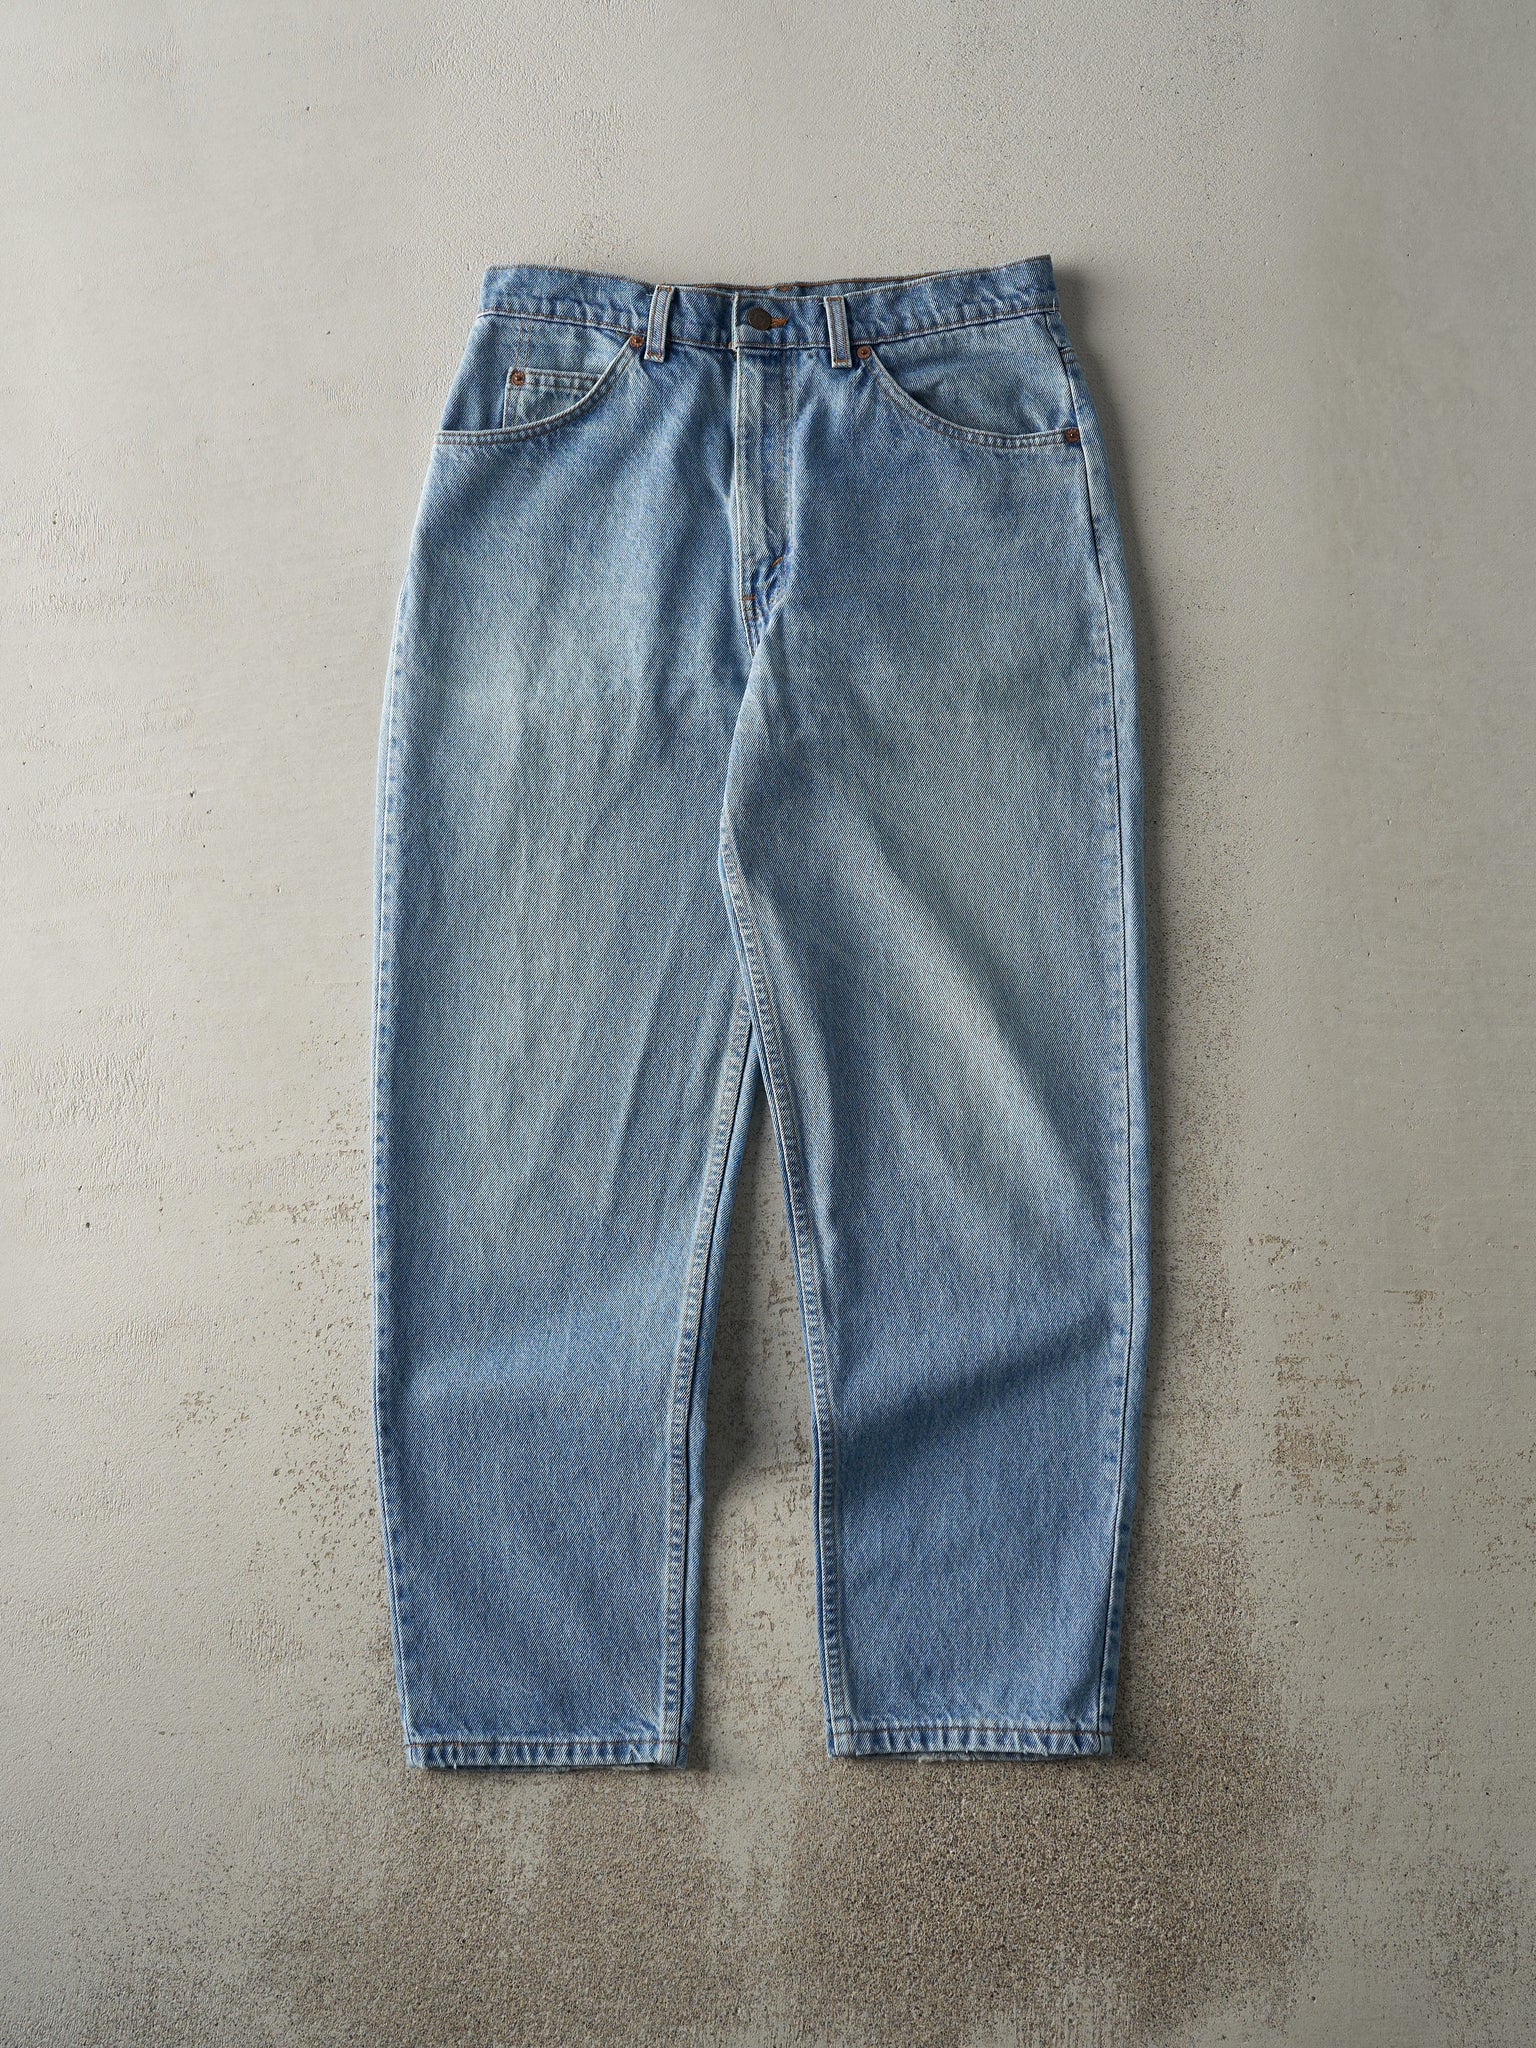 Vintage 90s Light Wash Levi's Orange Tab Jeans (32x30)